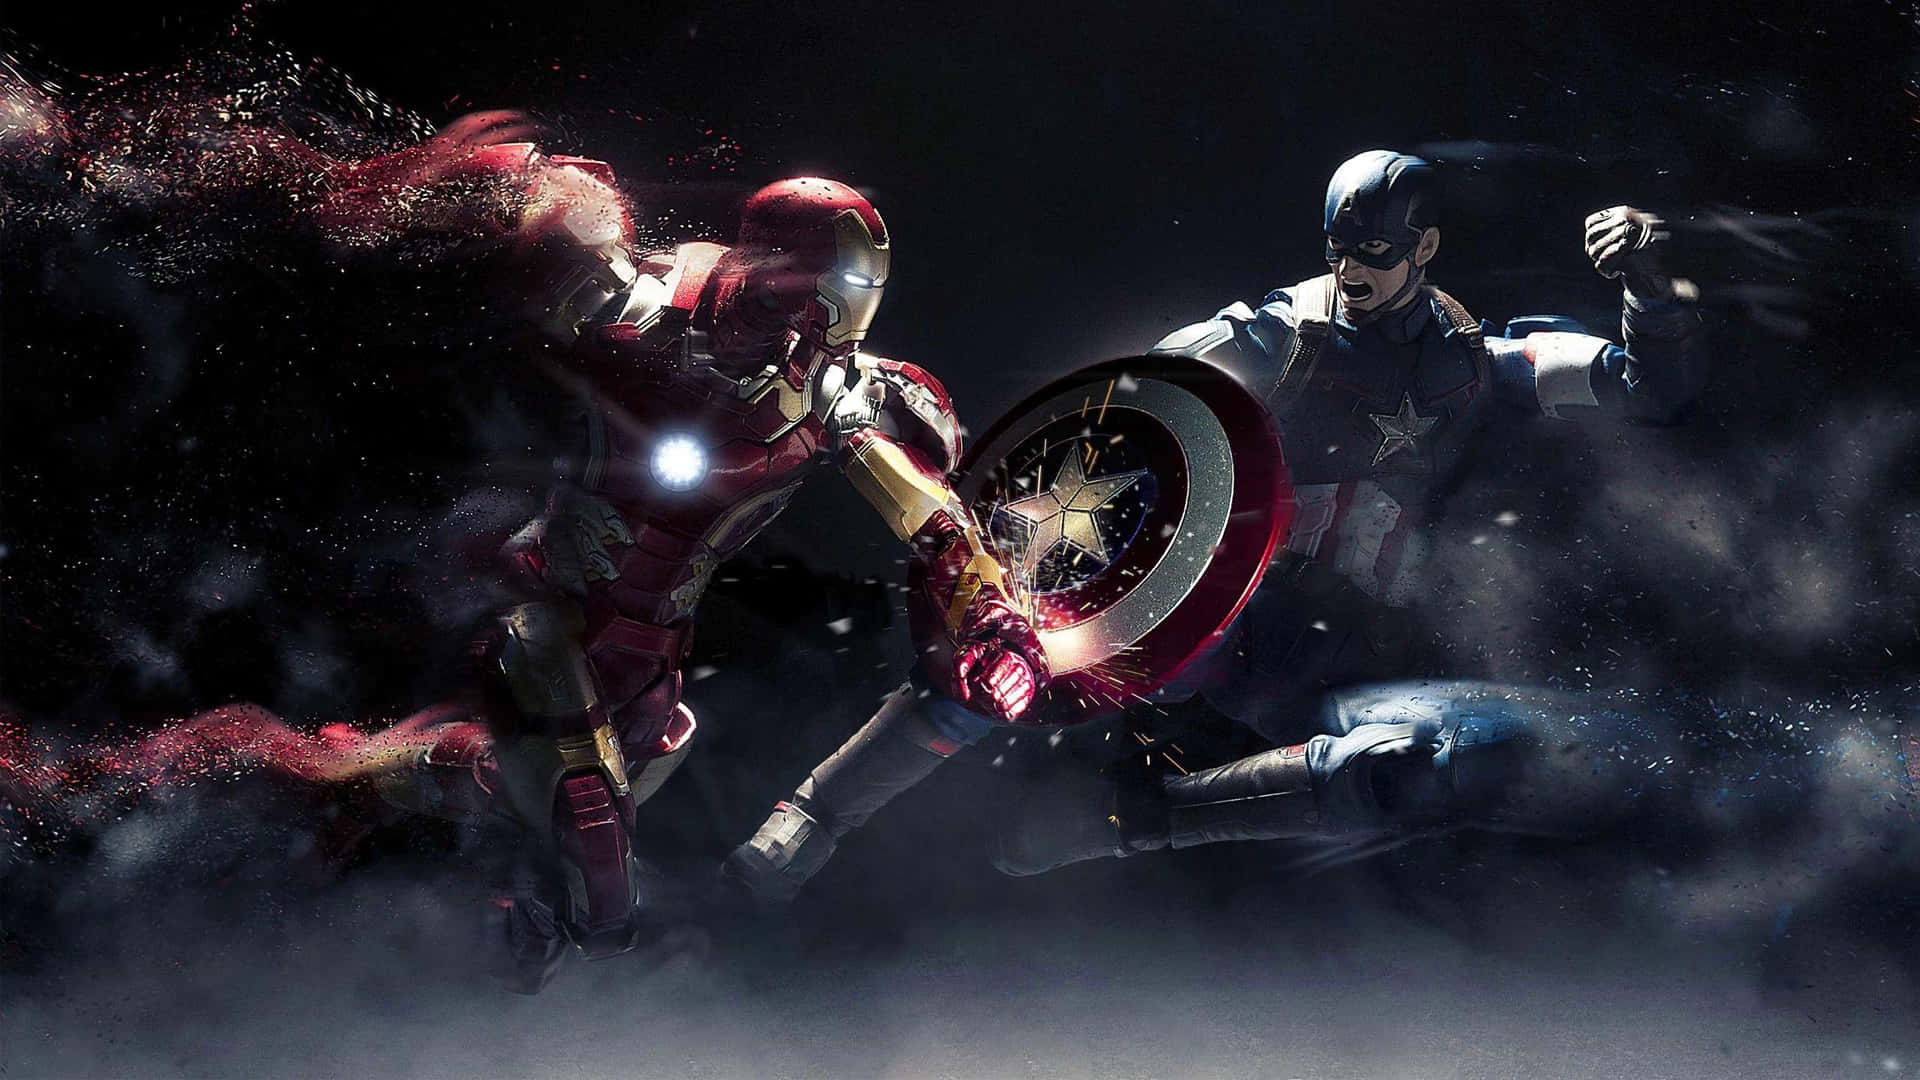 Iron Man vs Captain America: The Ultimate Battle" Wallpaper